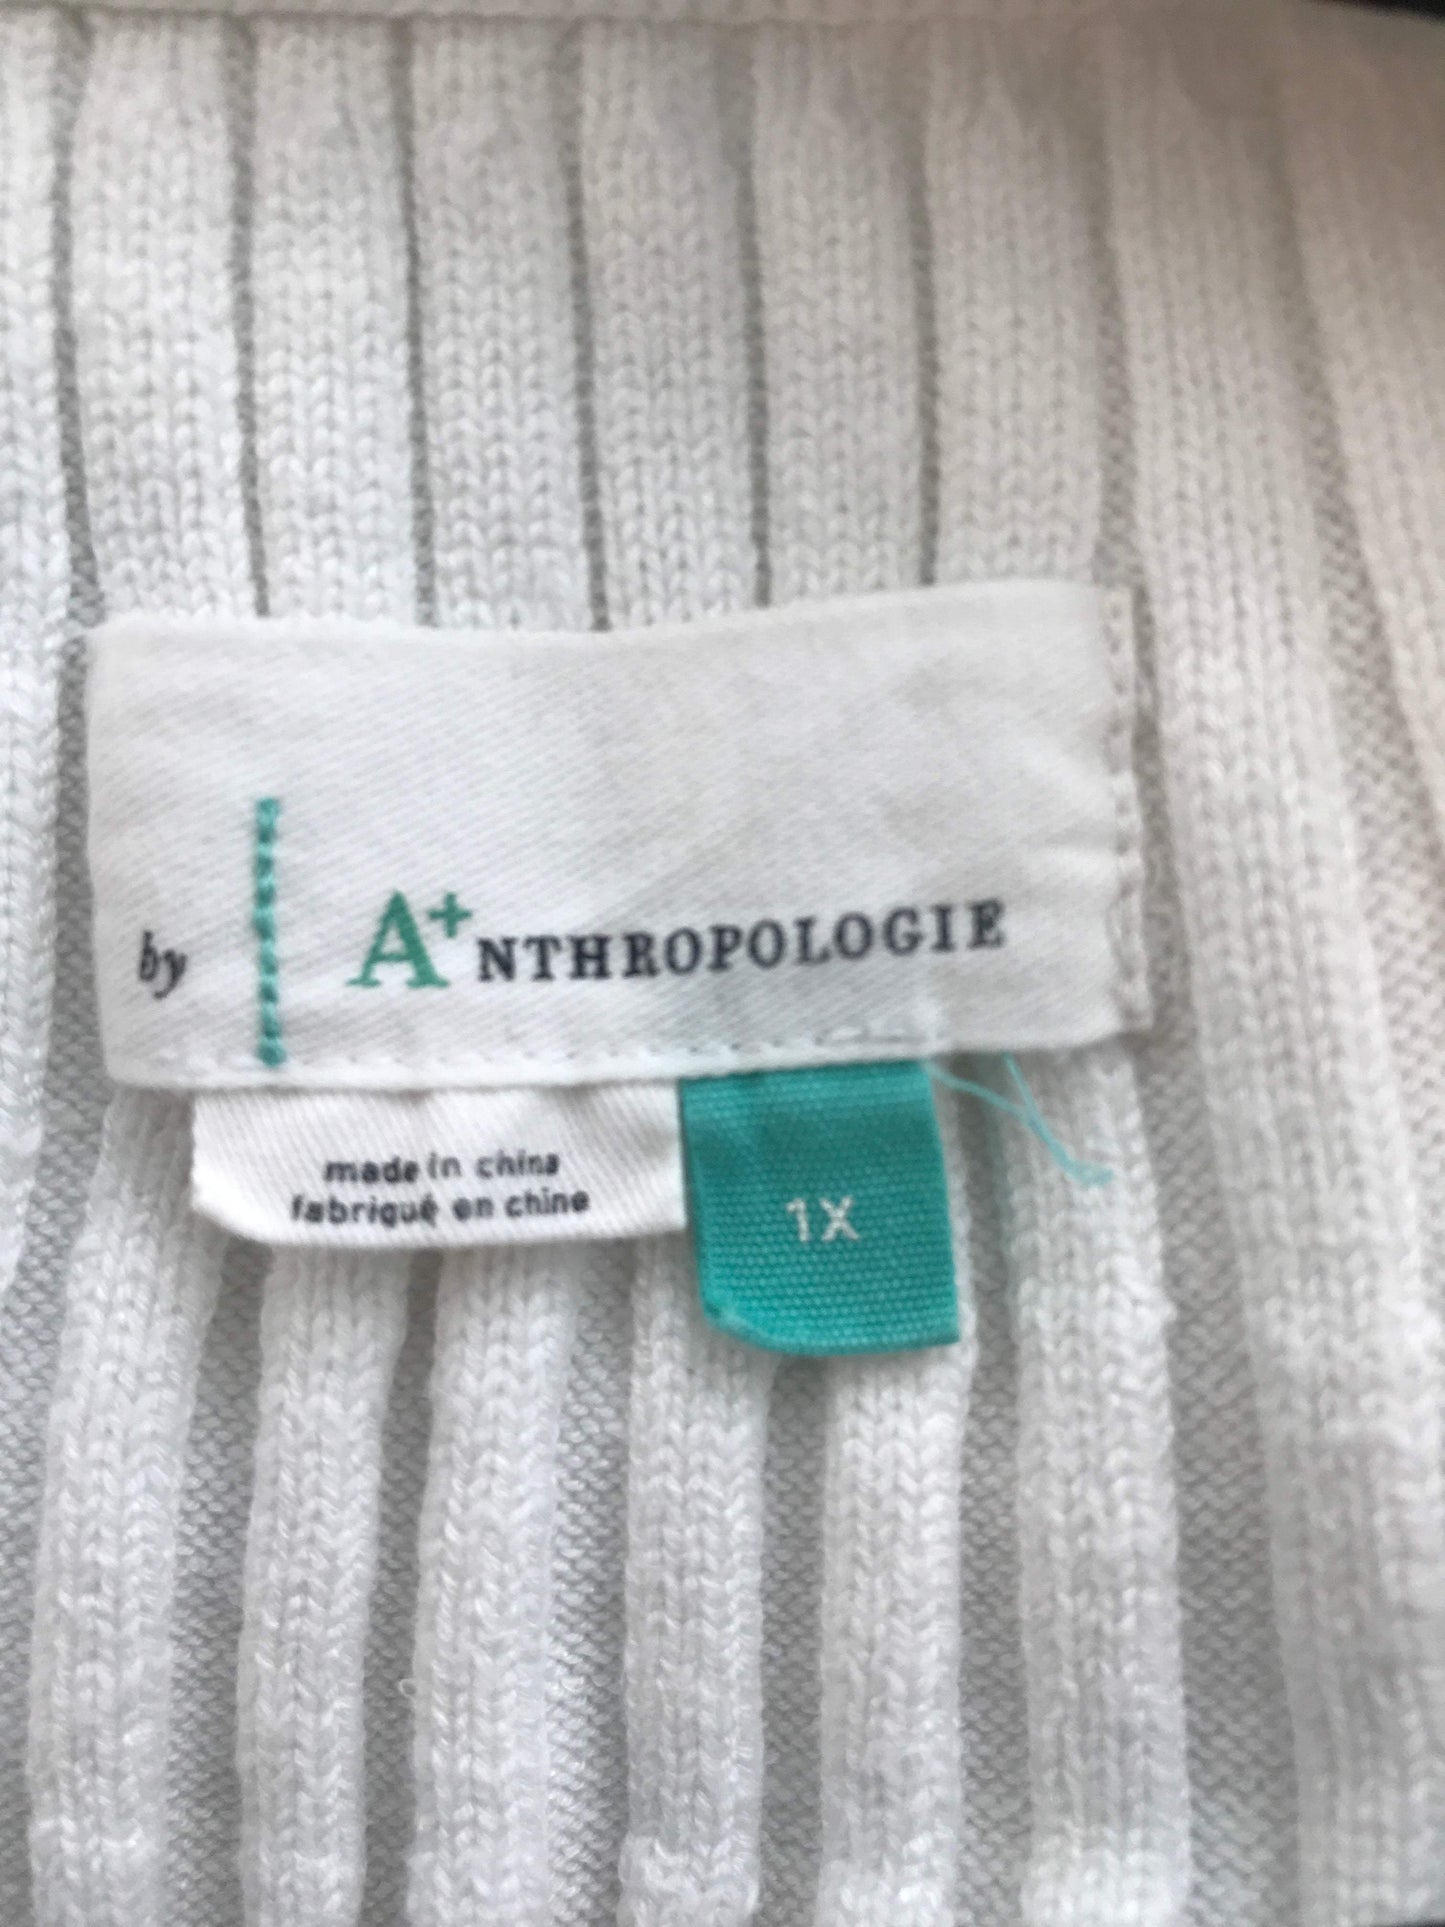 Anthropologie Size 1X Cotton/Rayon Cream Halter Top NWT